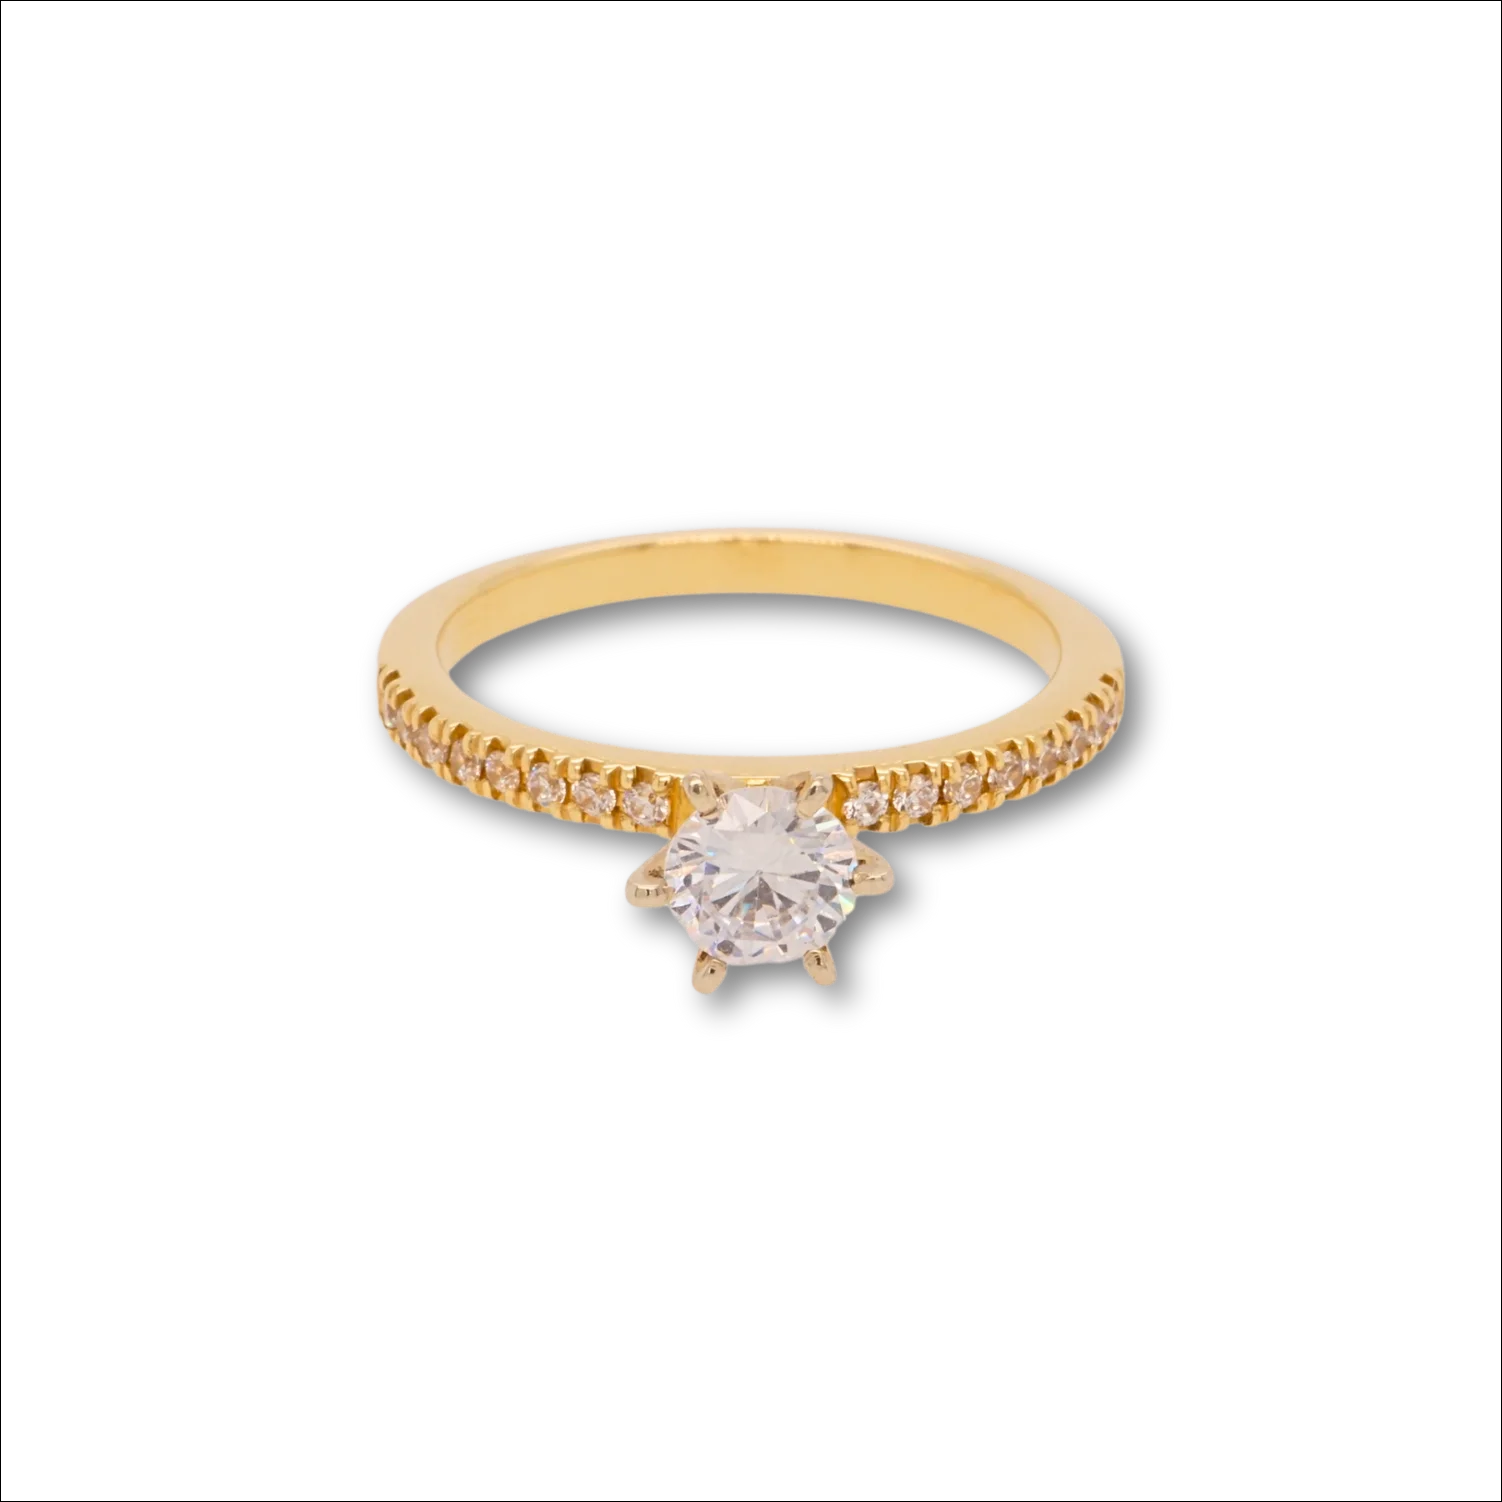 Luxurious 18k gold cz ring | Rings